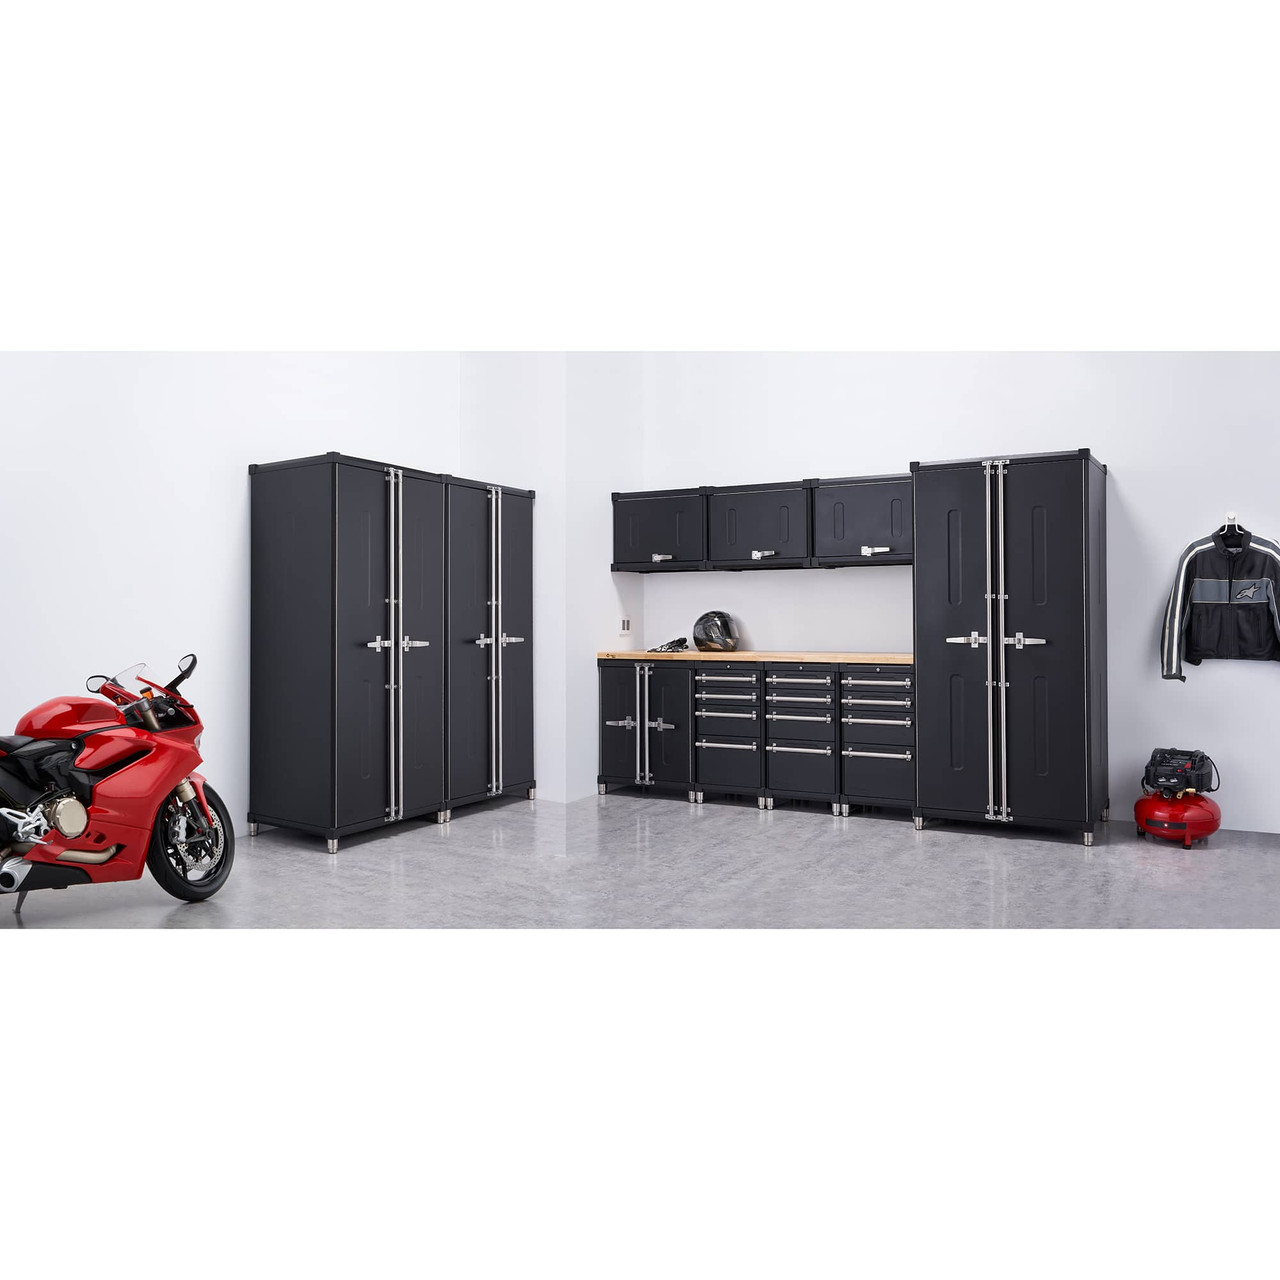 TRINITY PRO 11-piece Garage Cabinet Drawer Set